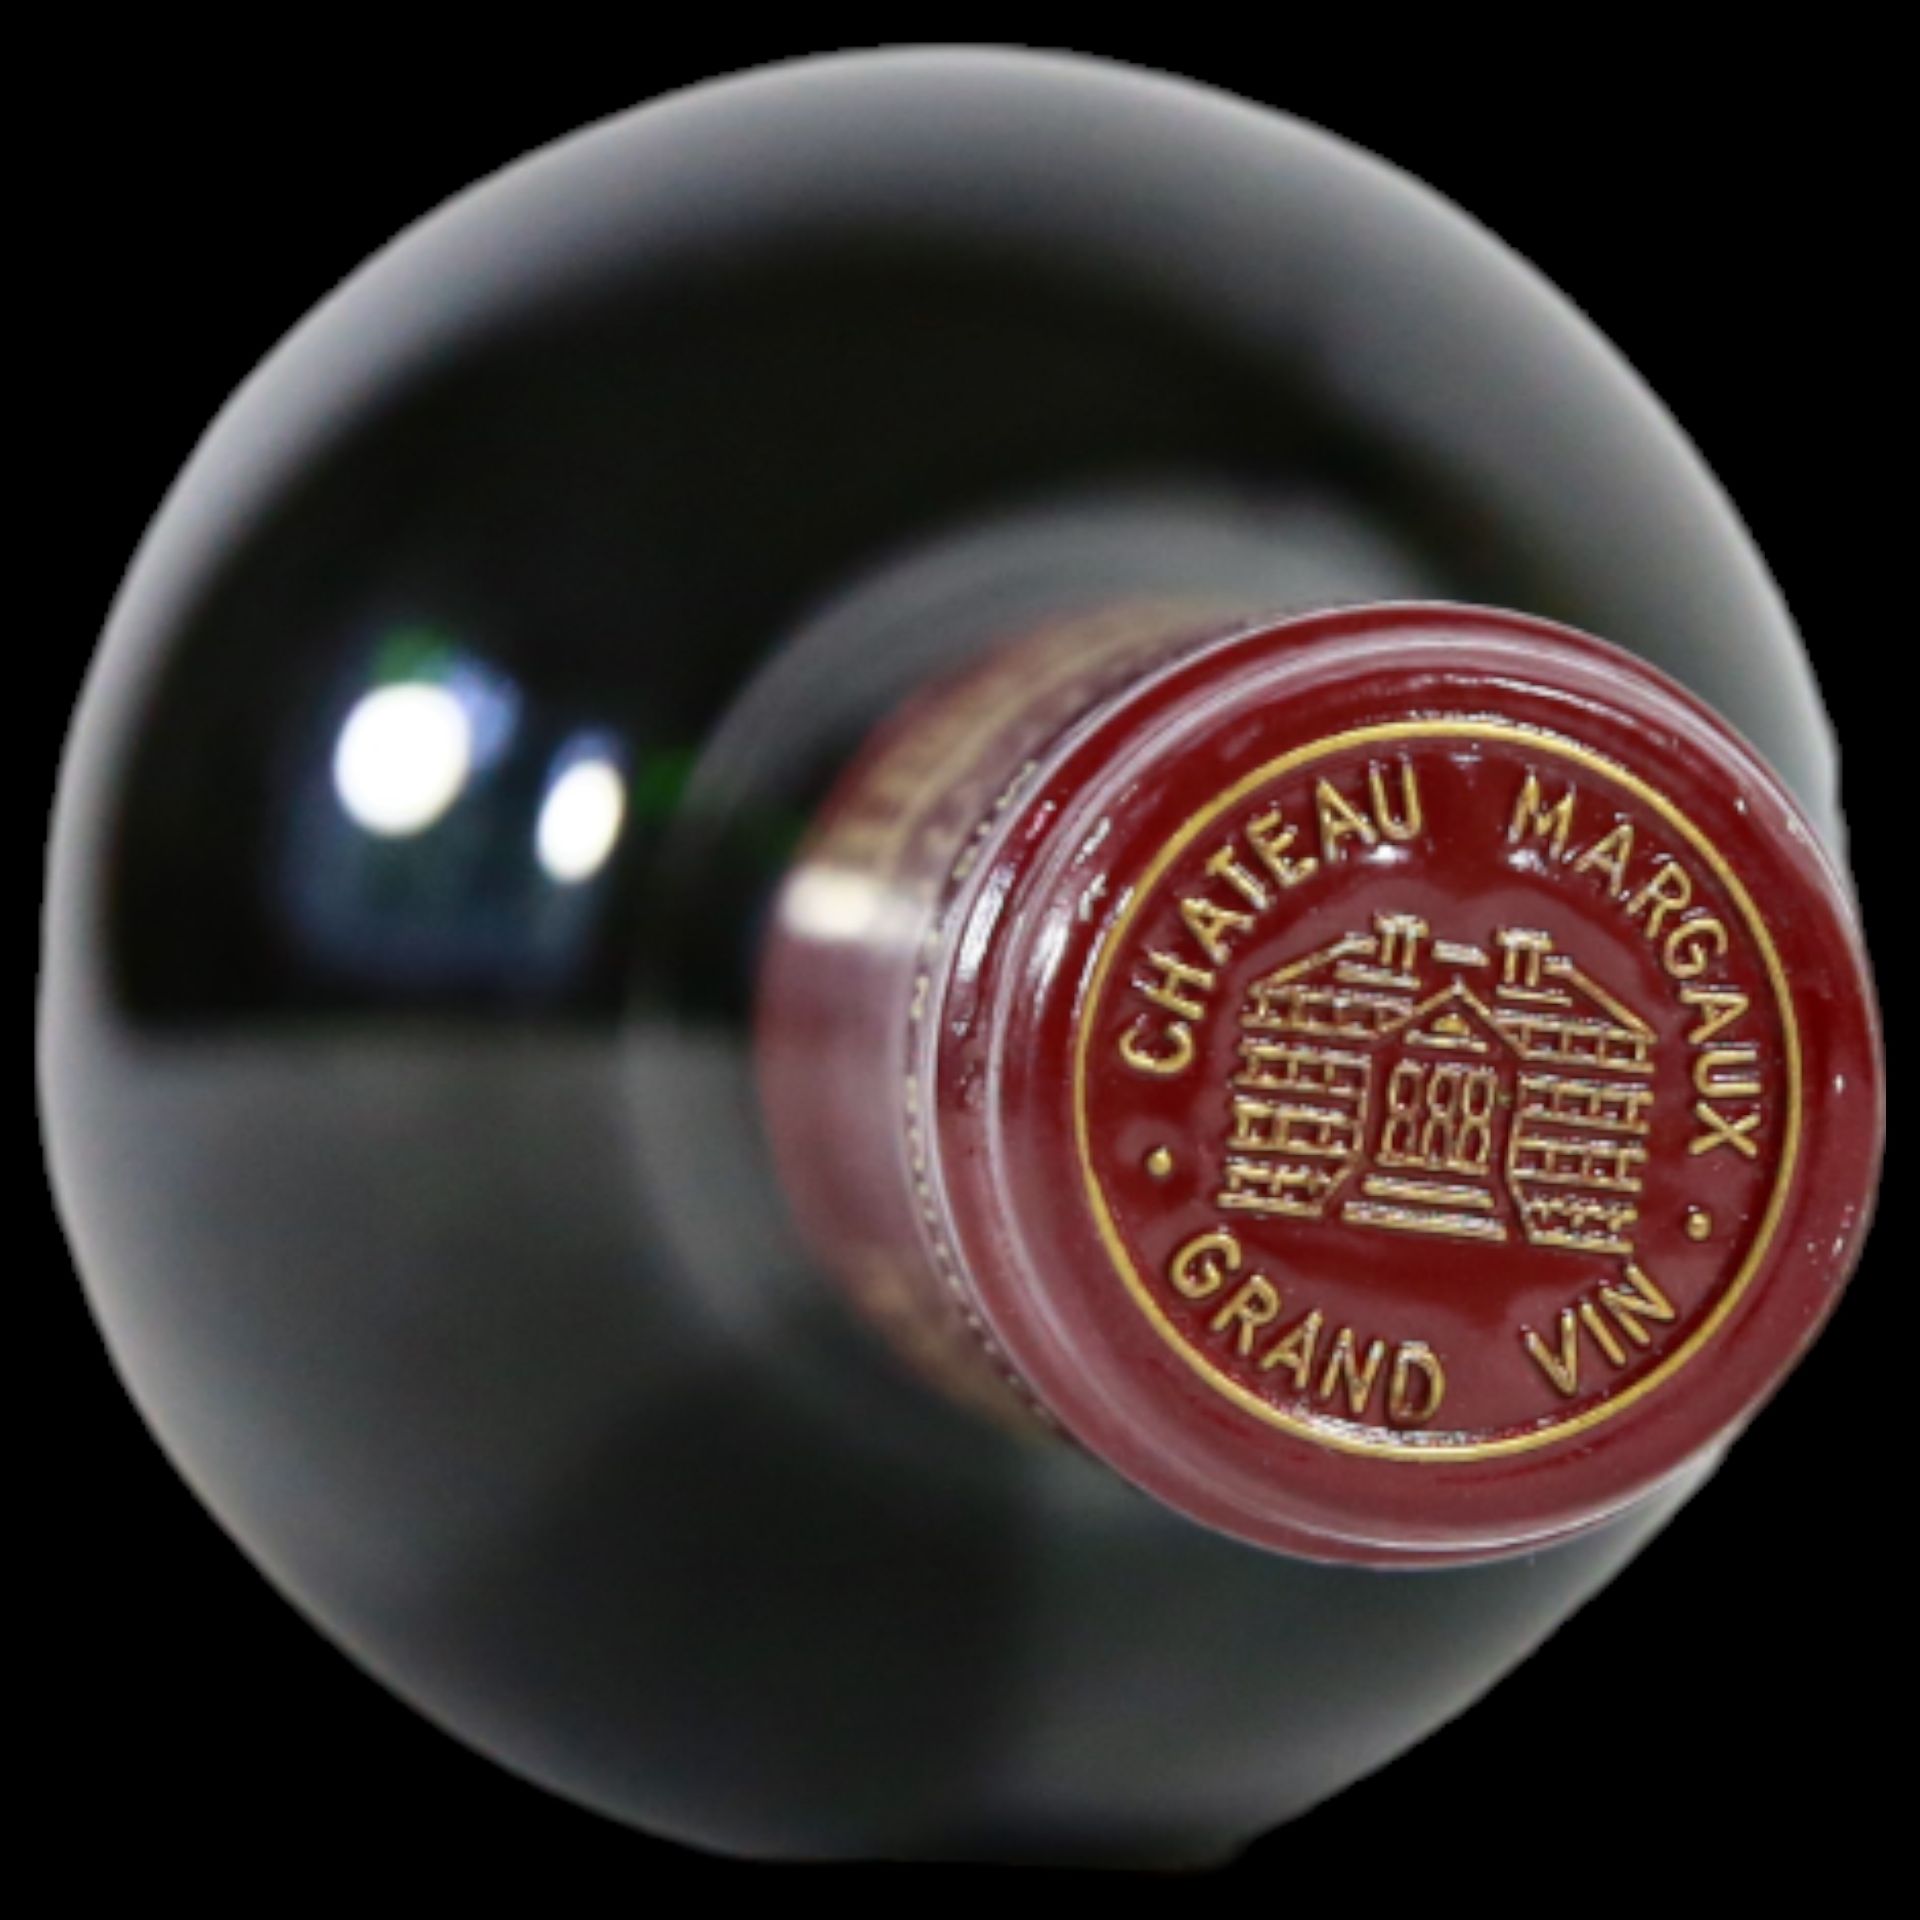 Bottle Vintage Chateau Margaux 1995, Premier Cru Classe. - Image 12 of 12